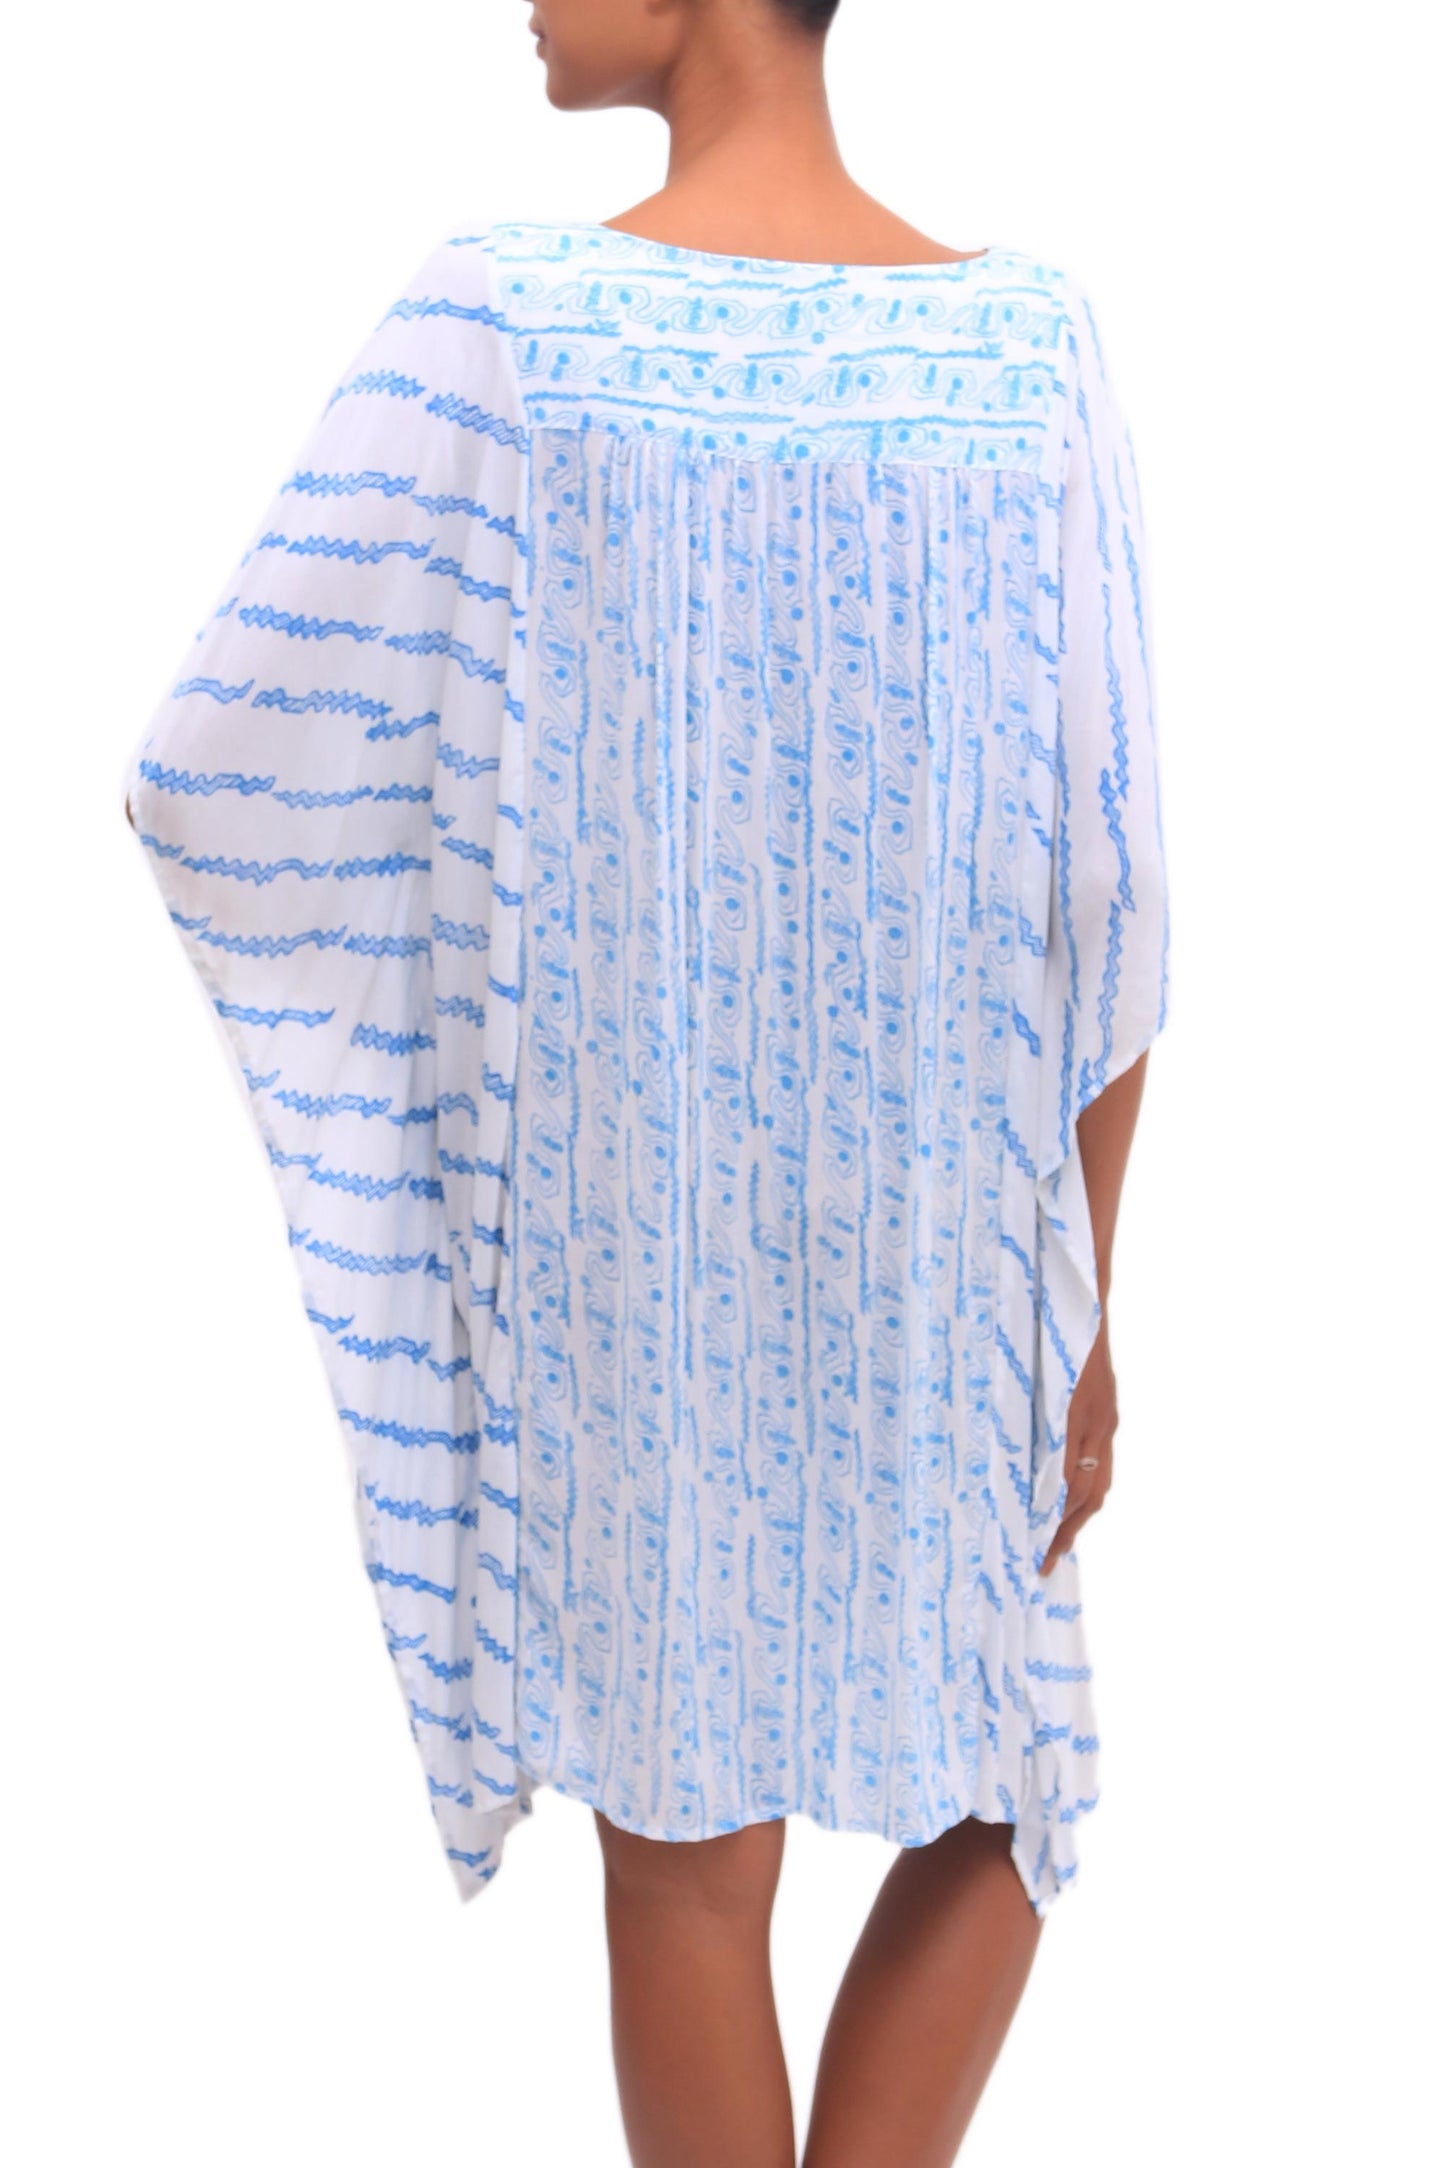 Azure Helix Helix Motif Rayon Short-Sleeve Tunic-Style Dress from Bali